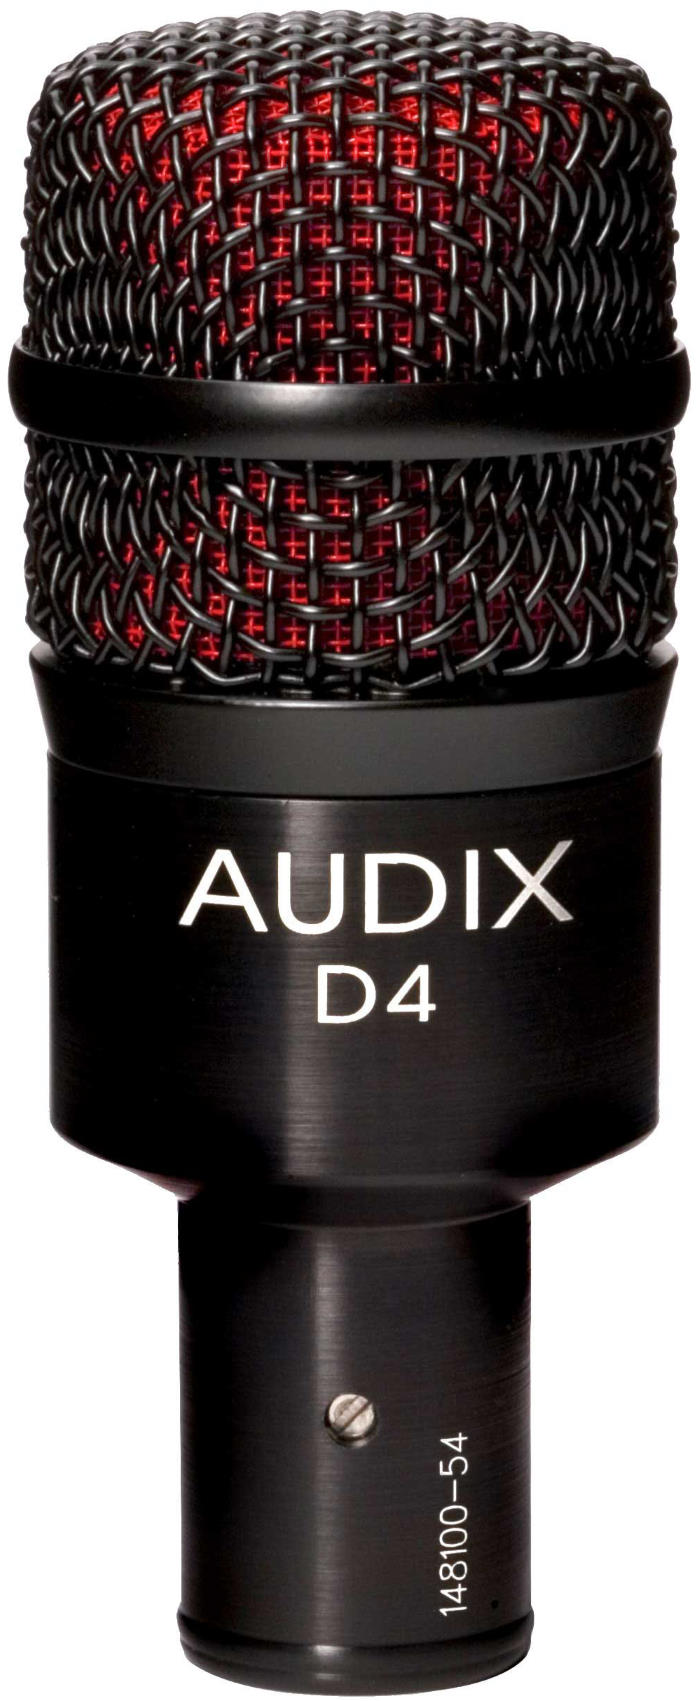 Audix D4 Hypercardioid Dynamic Instrument Microphone